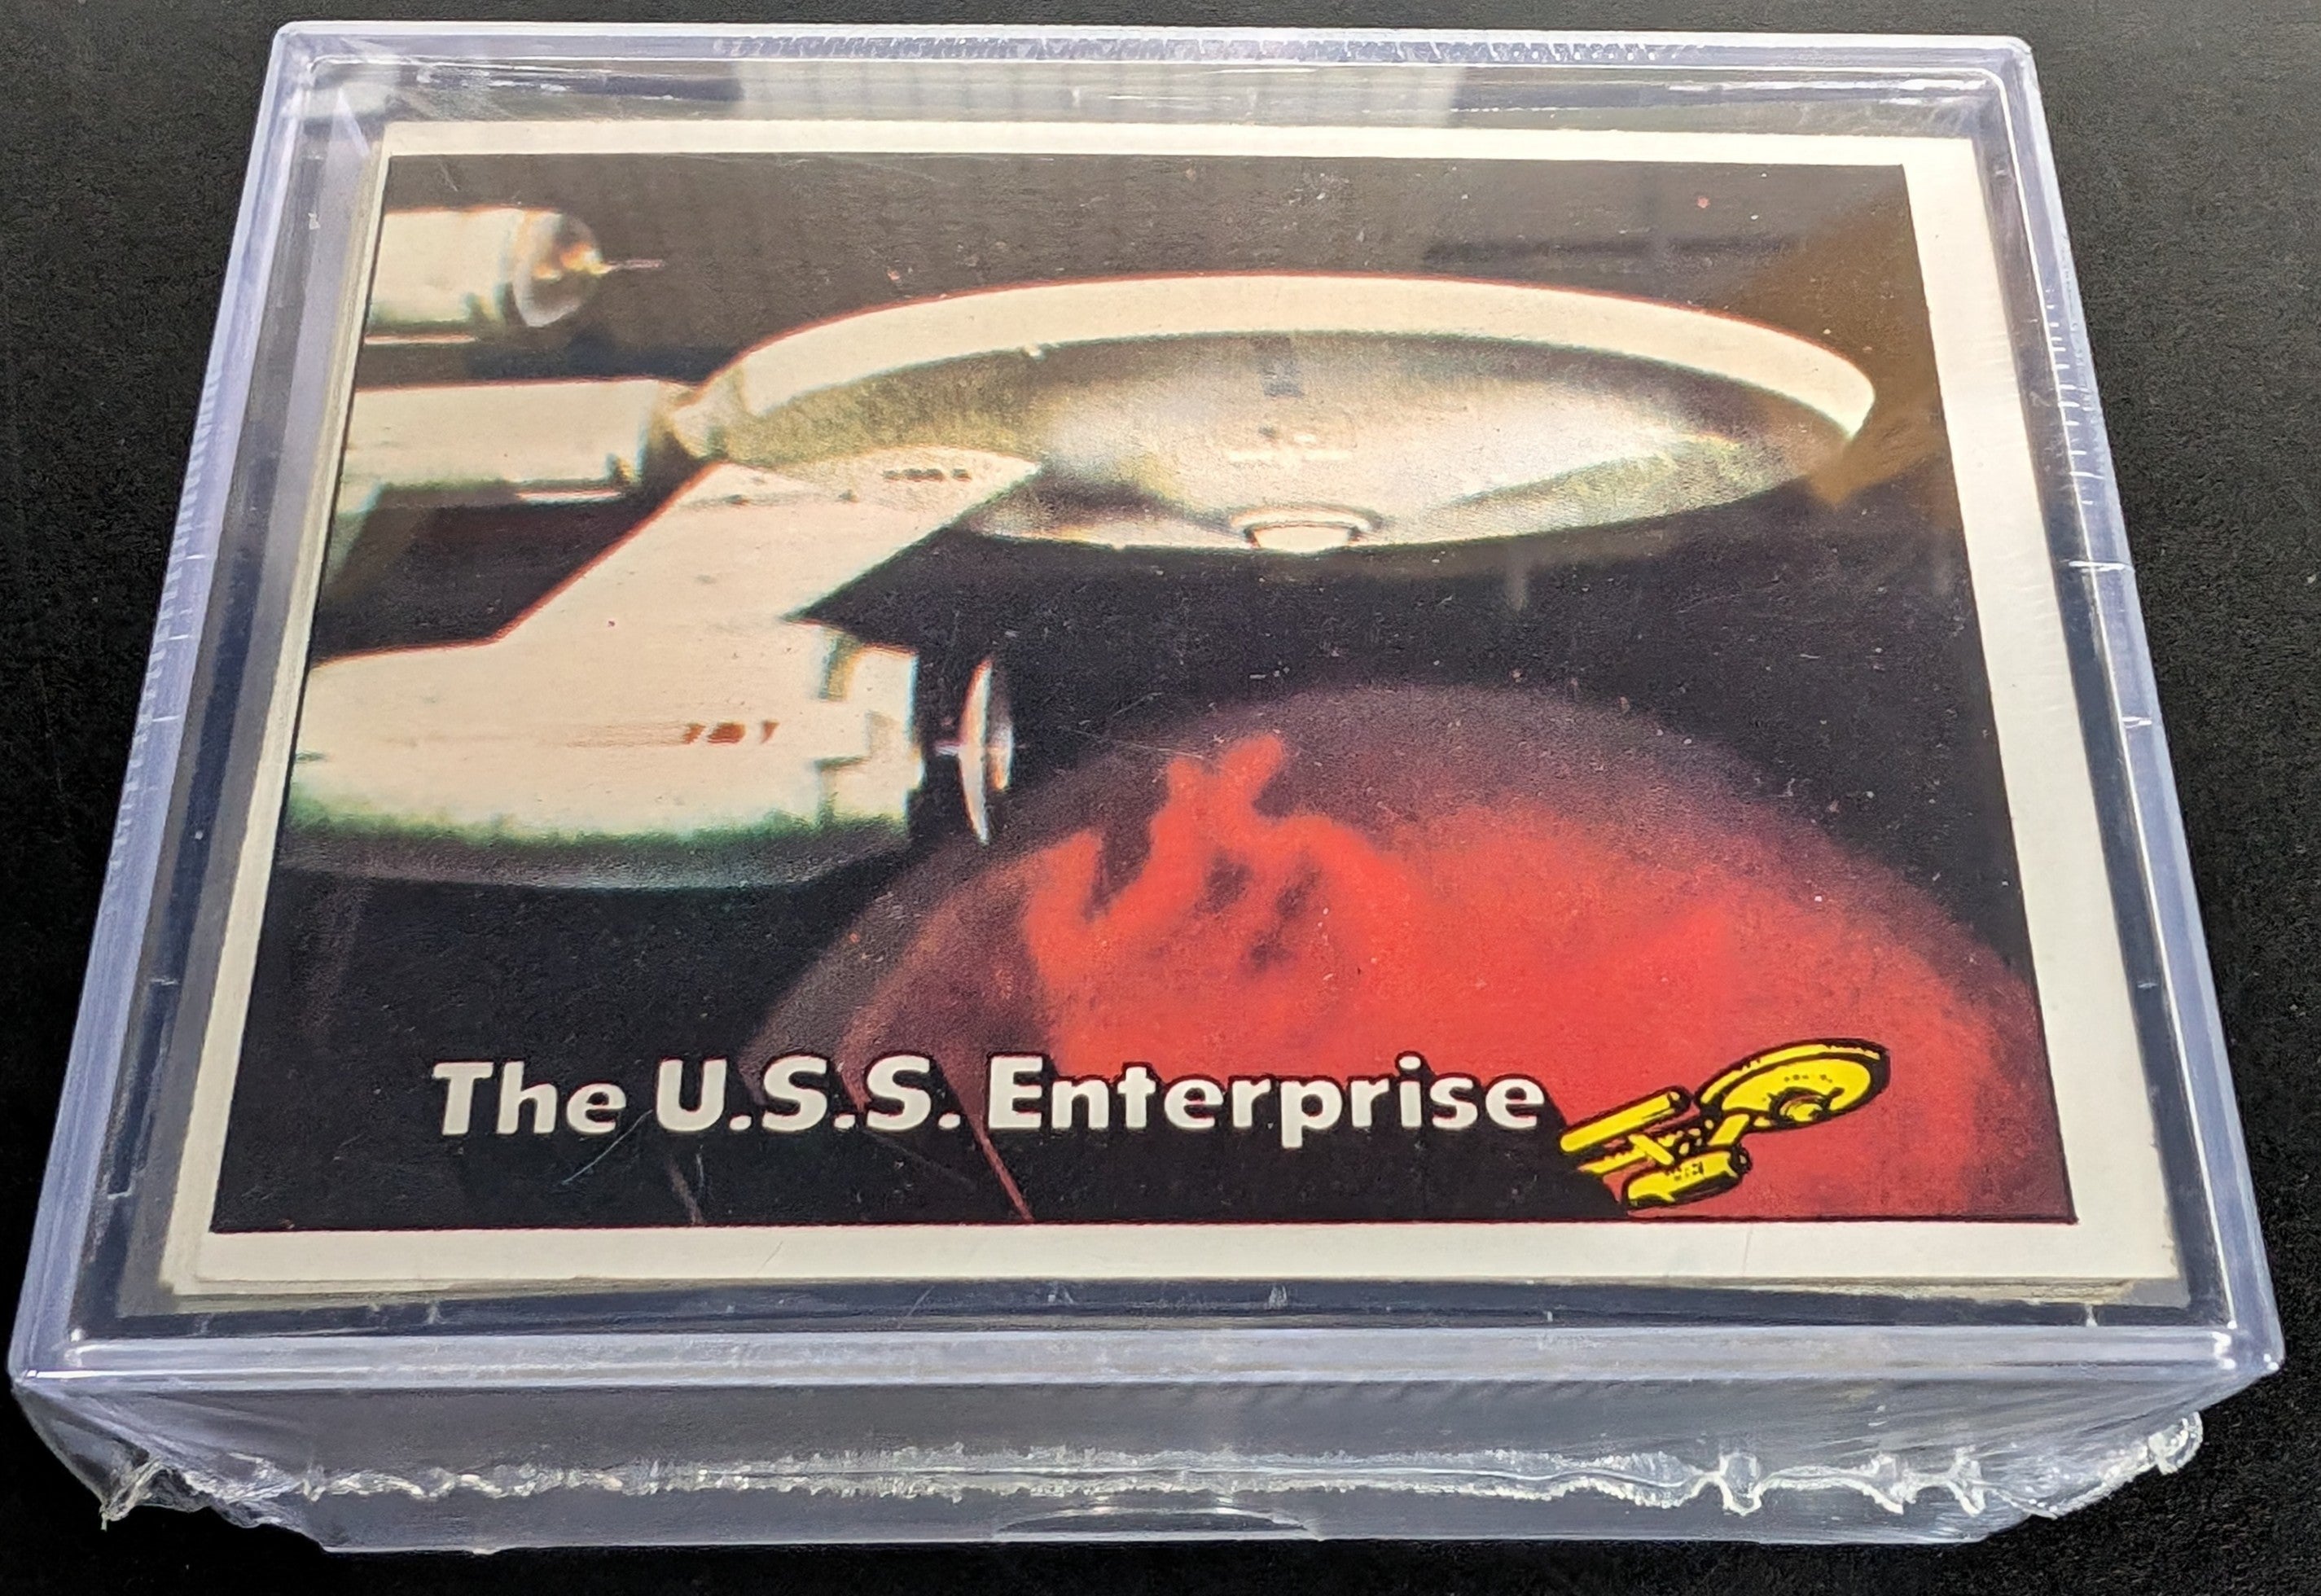 1976 Topps Star Trek Original Series Complete 88 Card Set